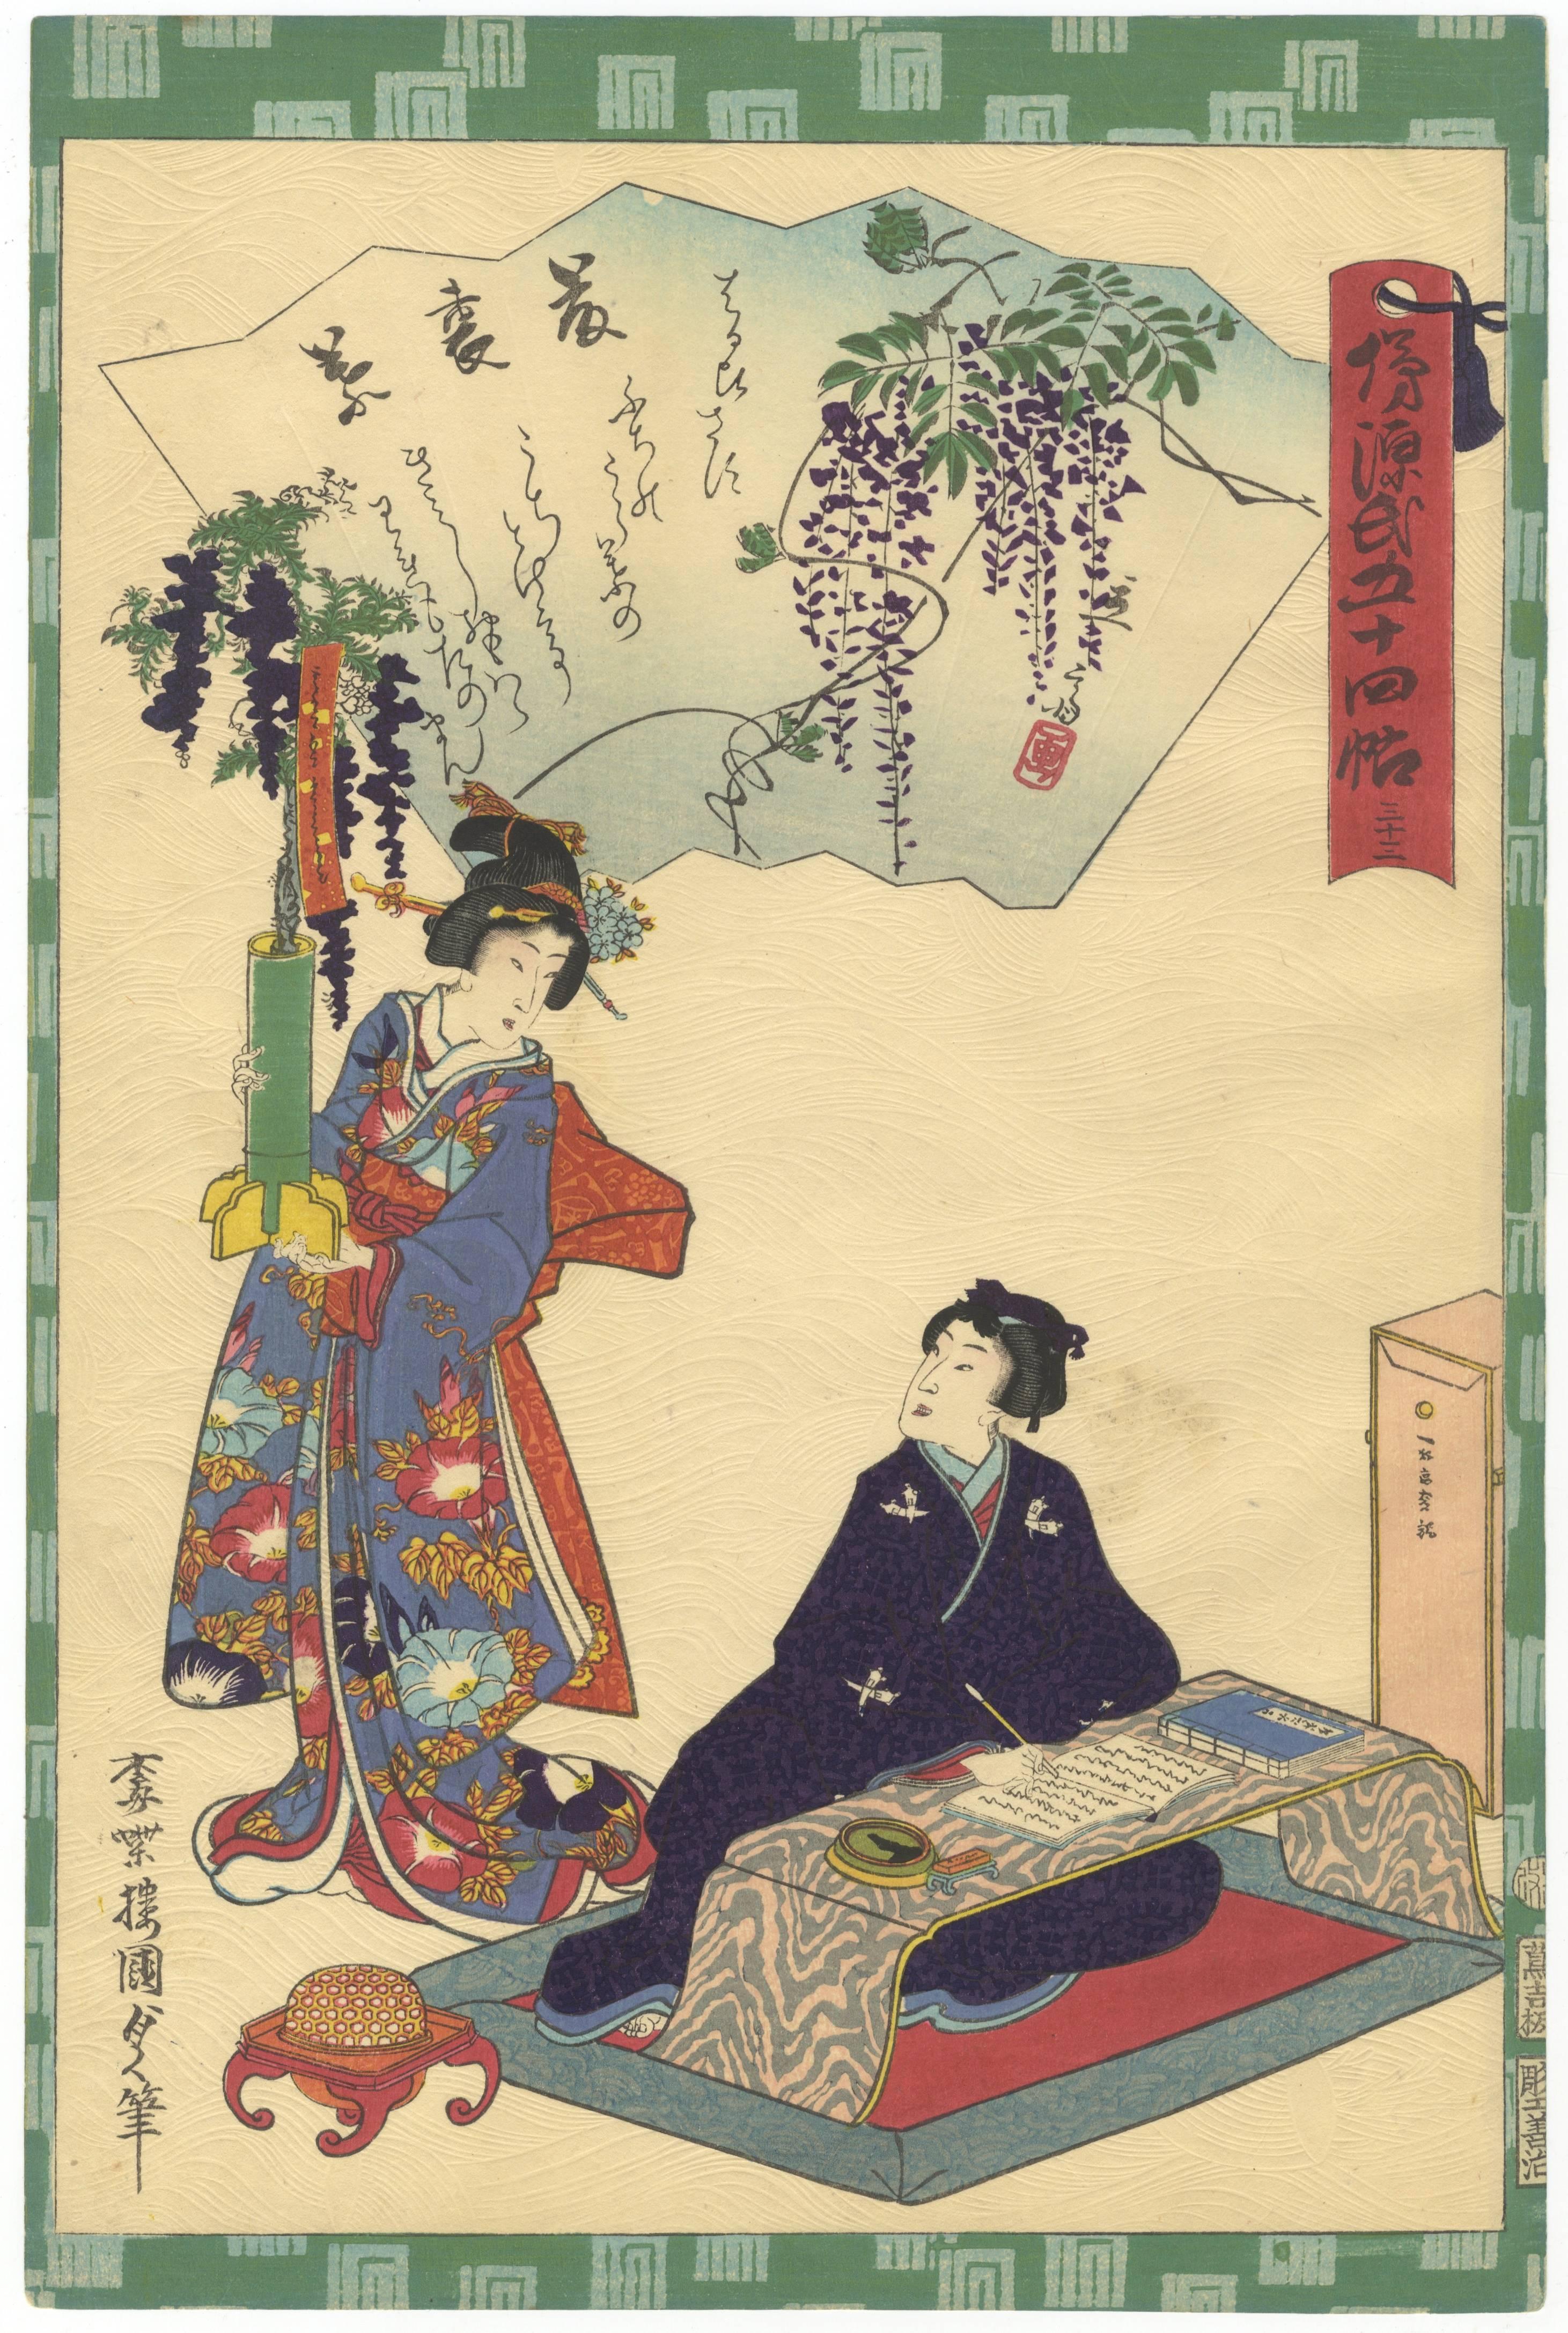 Utagawa Kunisada II (Toyokuni IV) Portrait Print - Tale of Genji, Kunisada II, Japanese Woodblock Print, Ukiyo-e, Ikebana, Wisteria